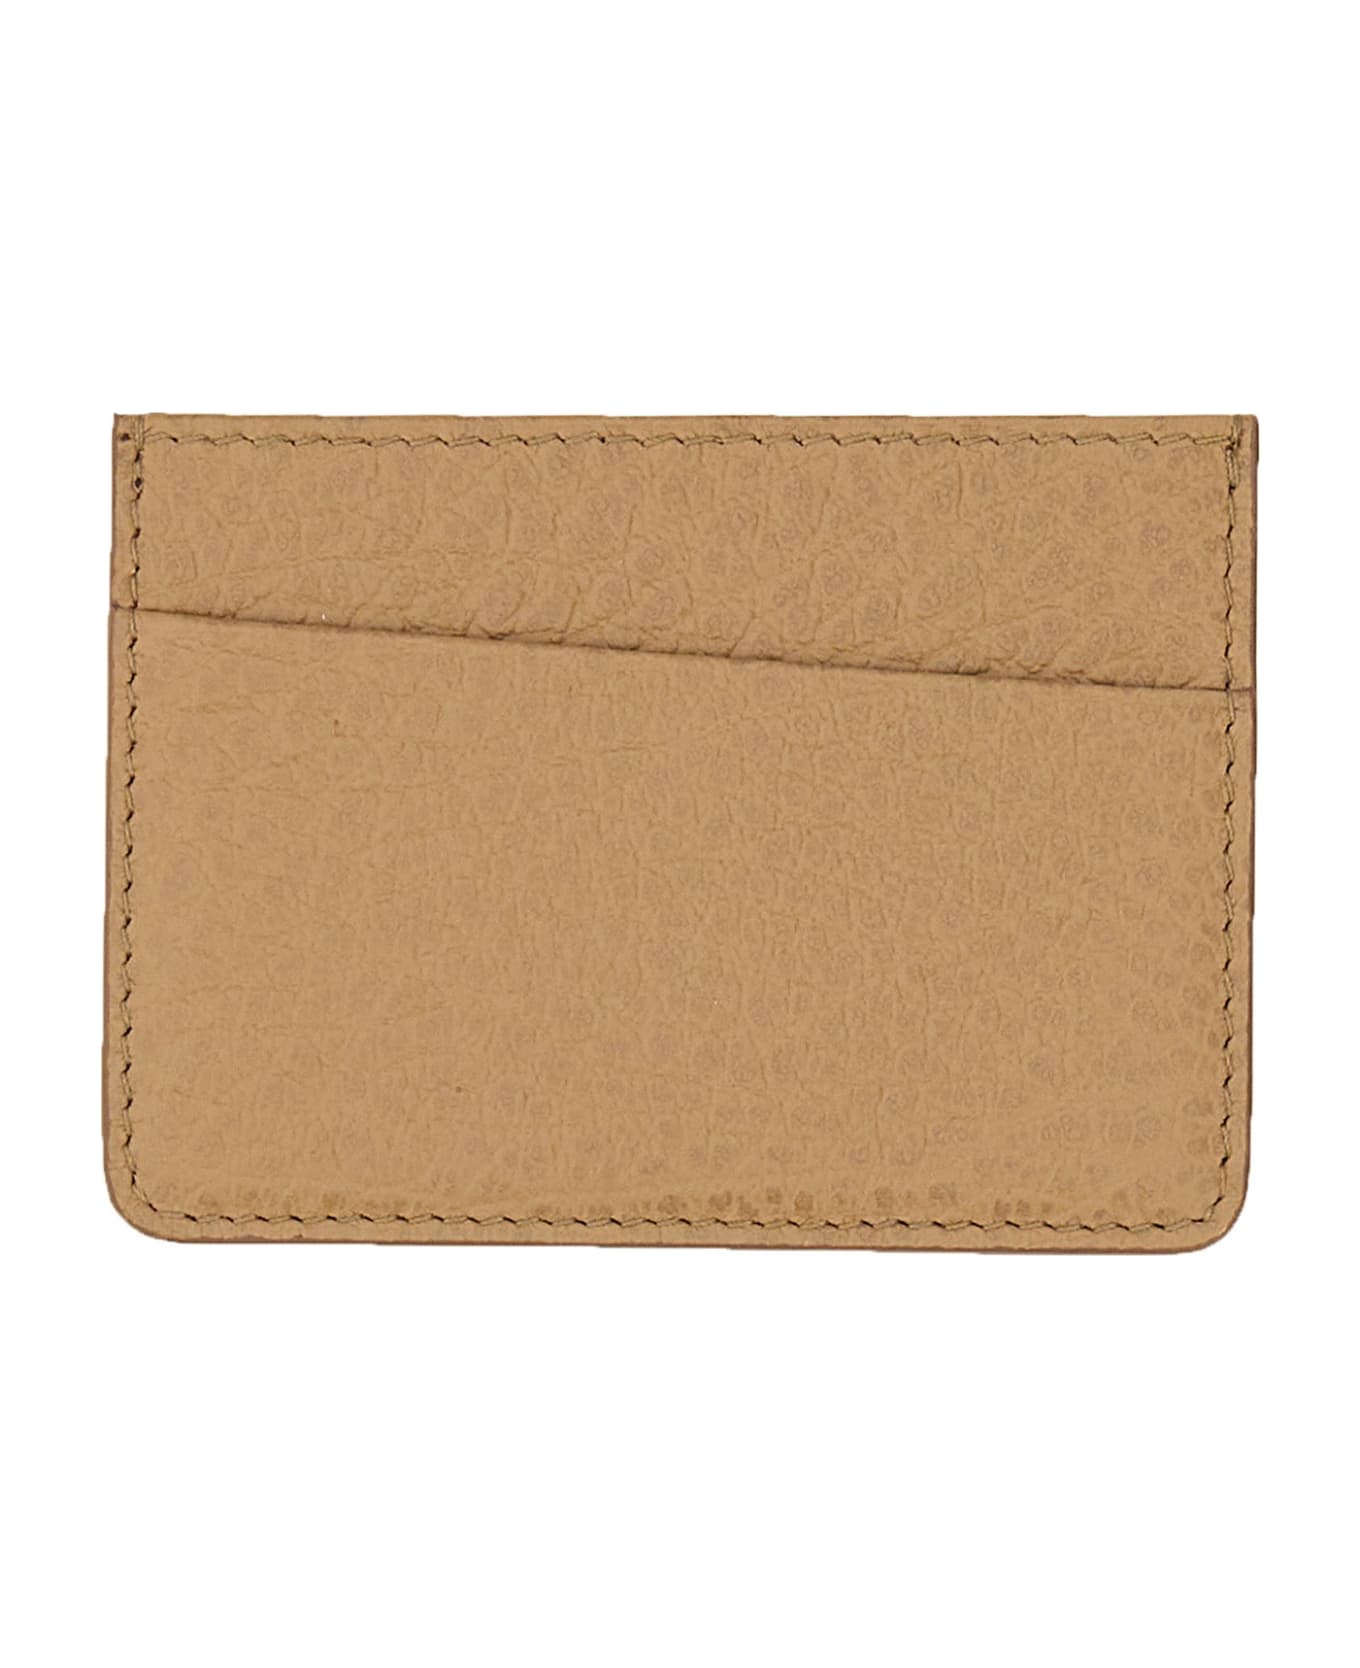 Maison Margiela Textured Leather Card Holder - Beige